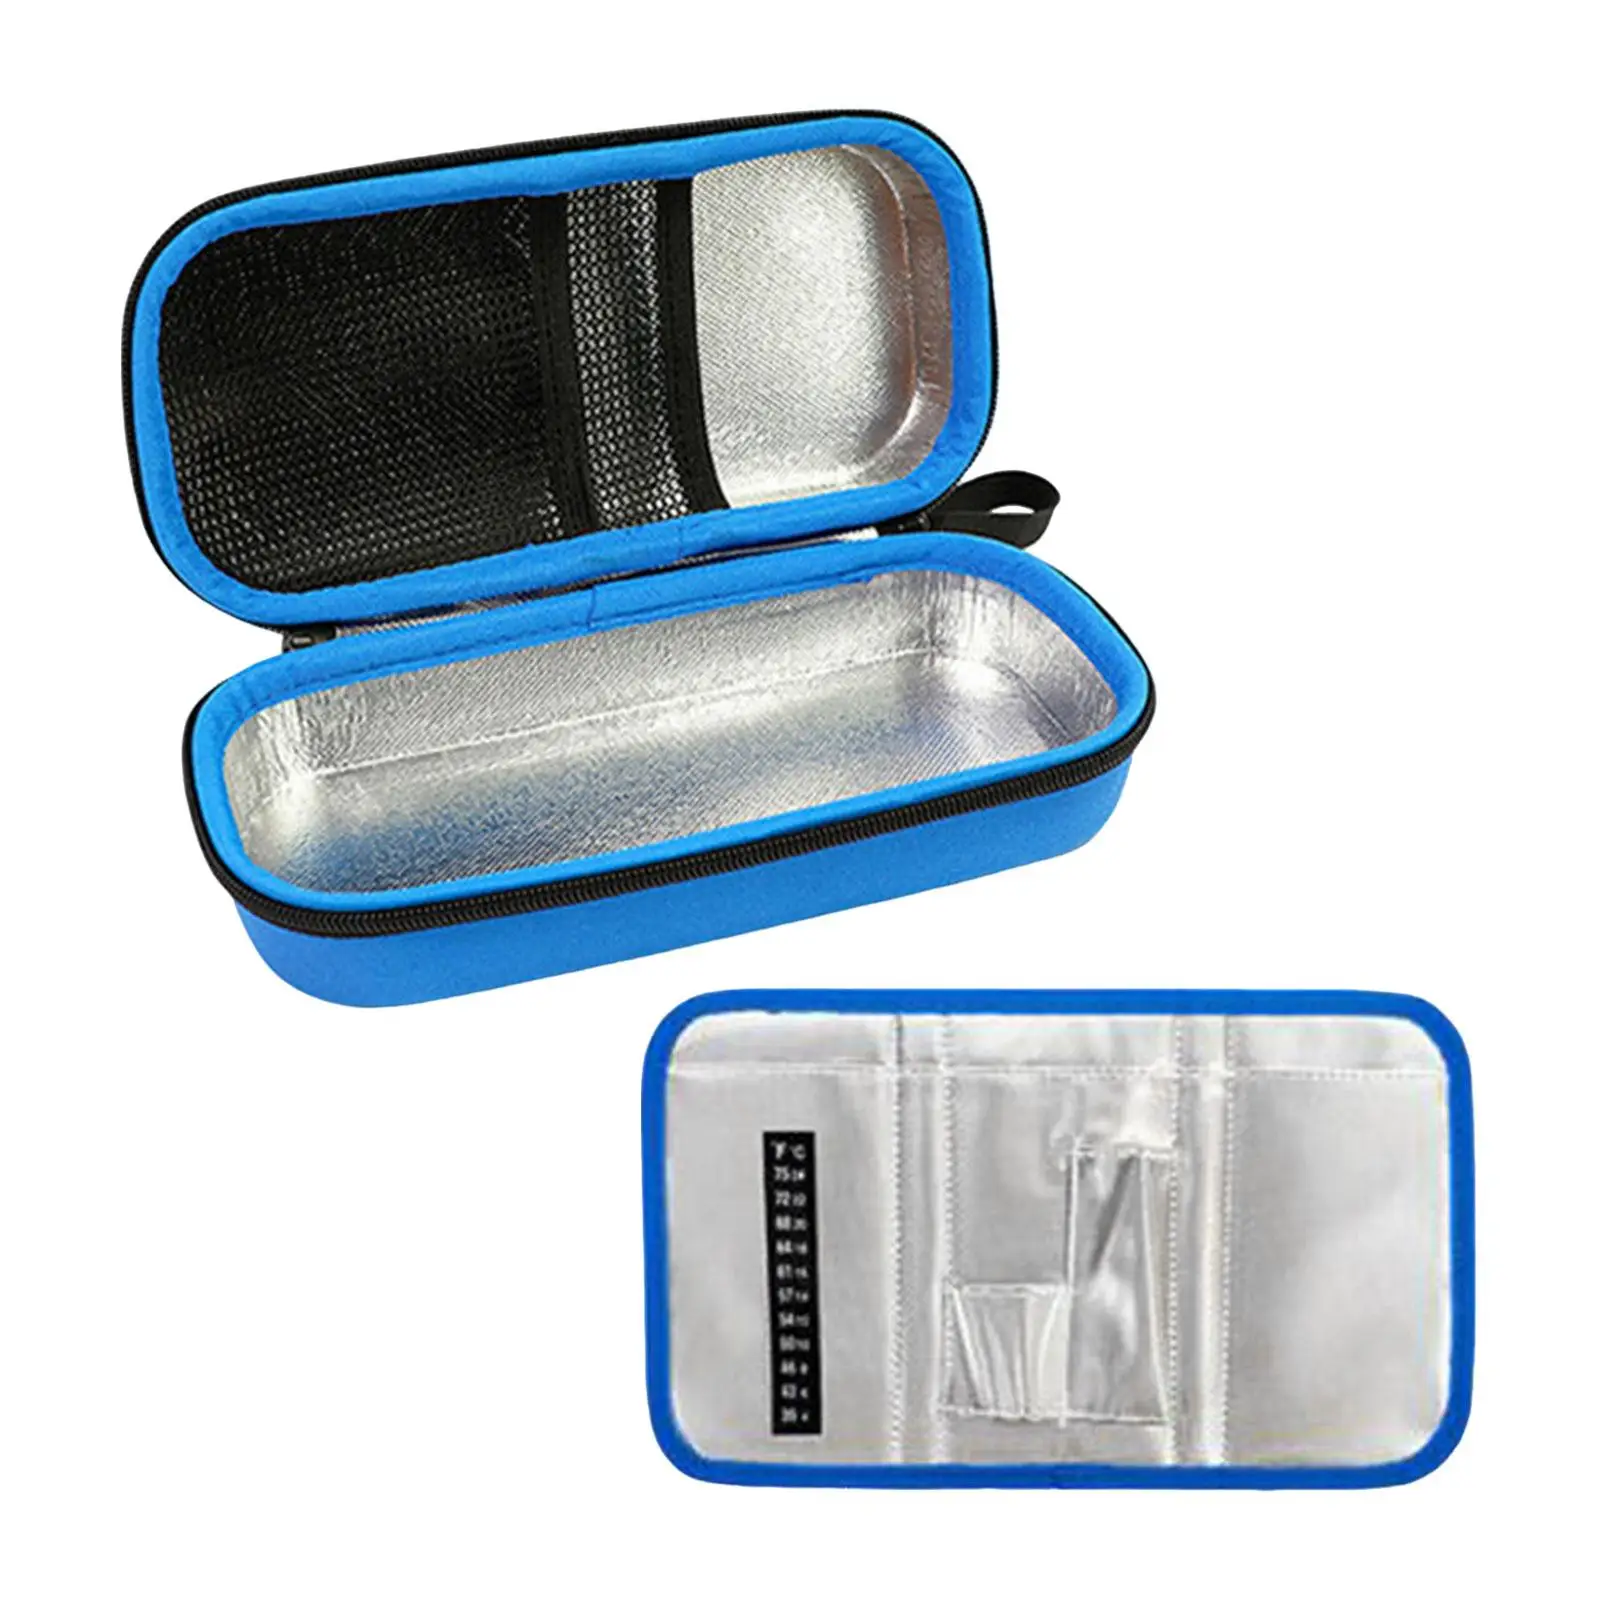 Medical Cooler Bag Convenient Outdoor Zipper Closure Protective Travel Bag Organizer Protector W/ Handle Cooler Travel Case